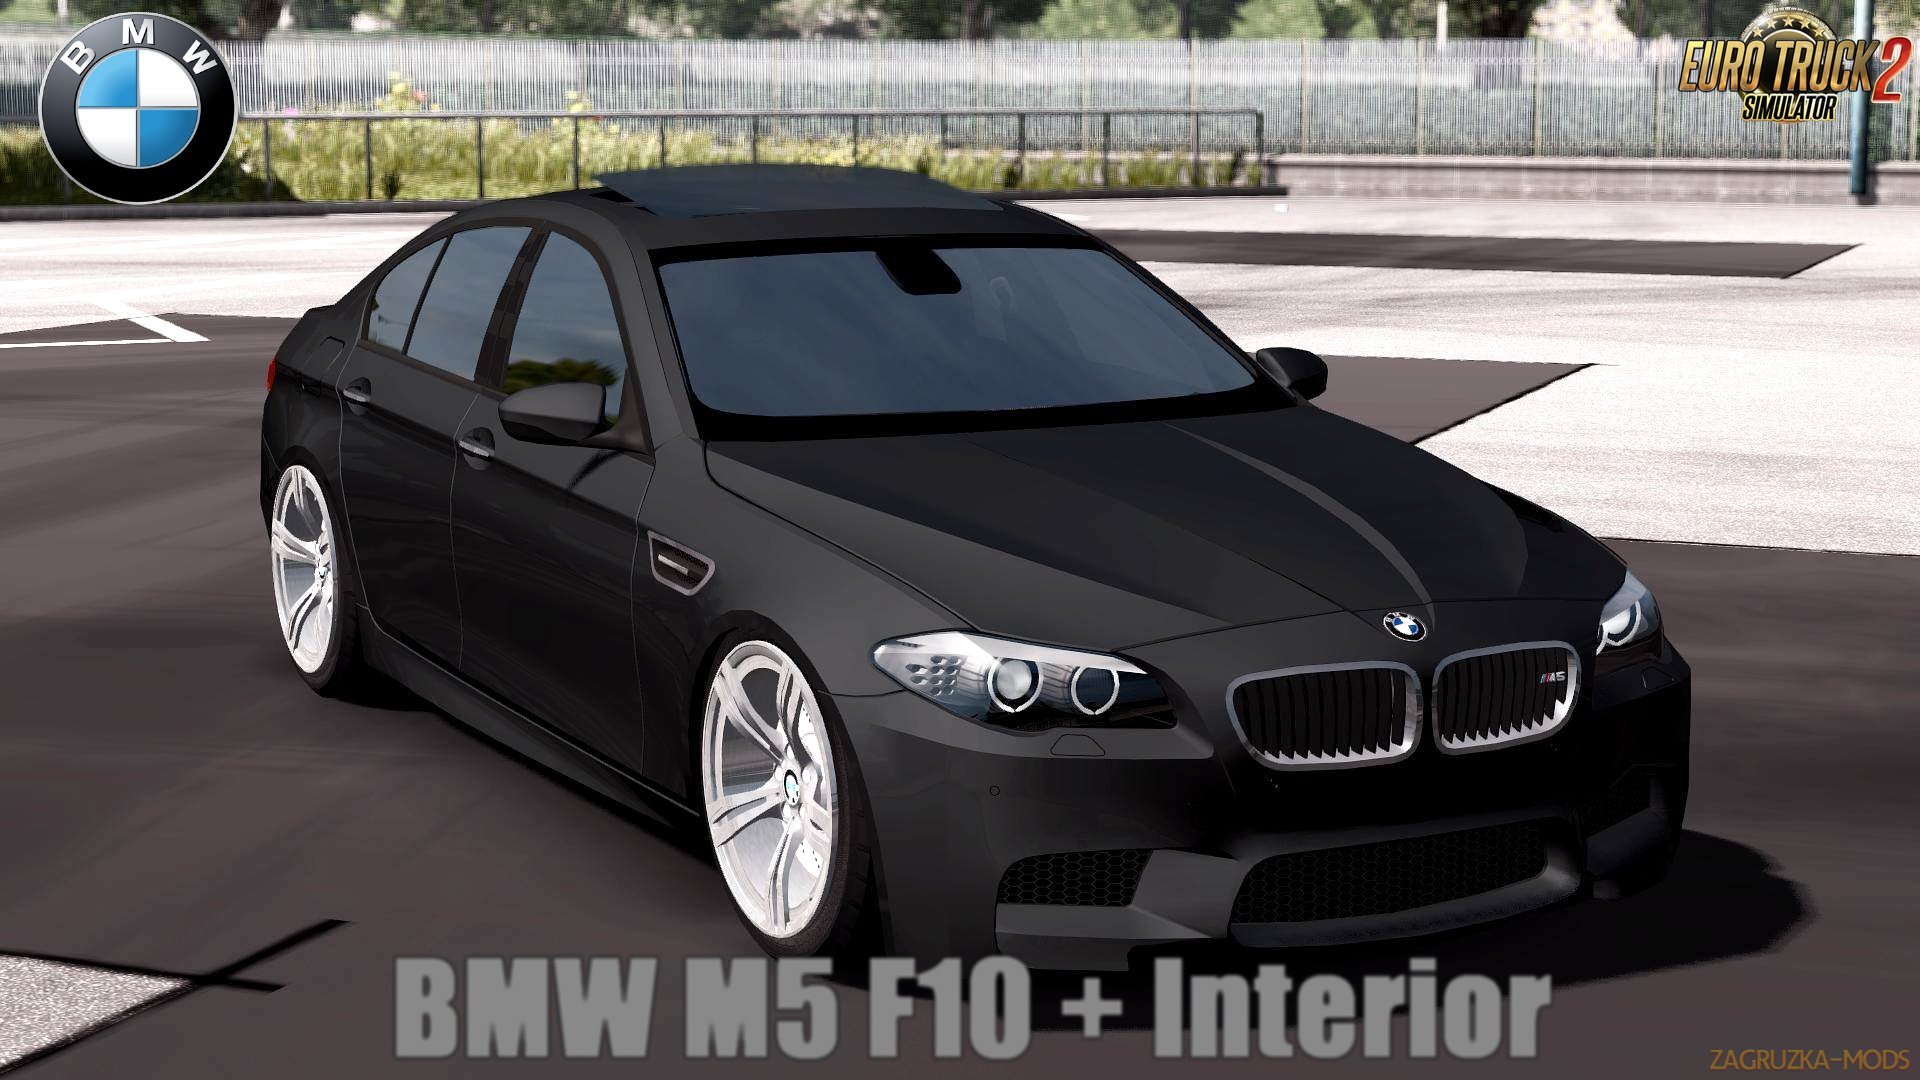 BMW M5 F10 + Interior v3.0 (Upgraded) (1.28.x) for ETS 2